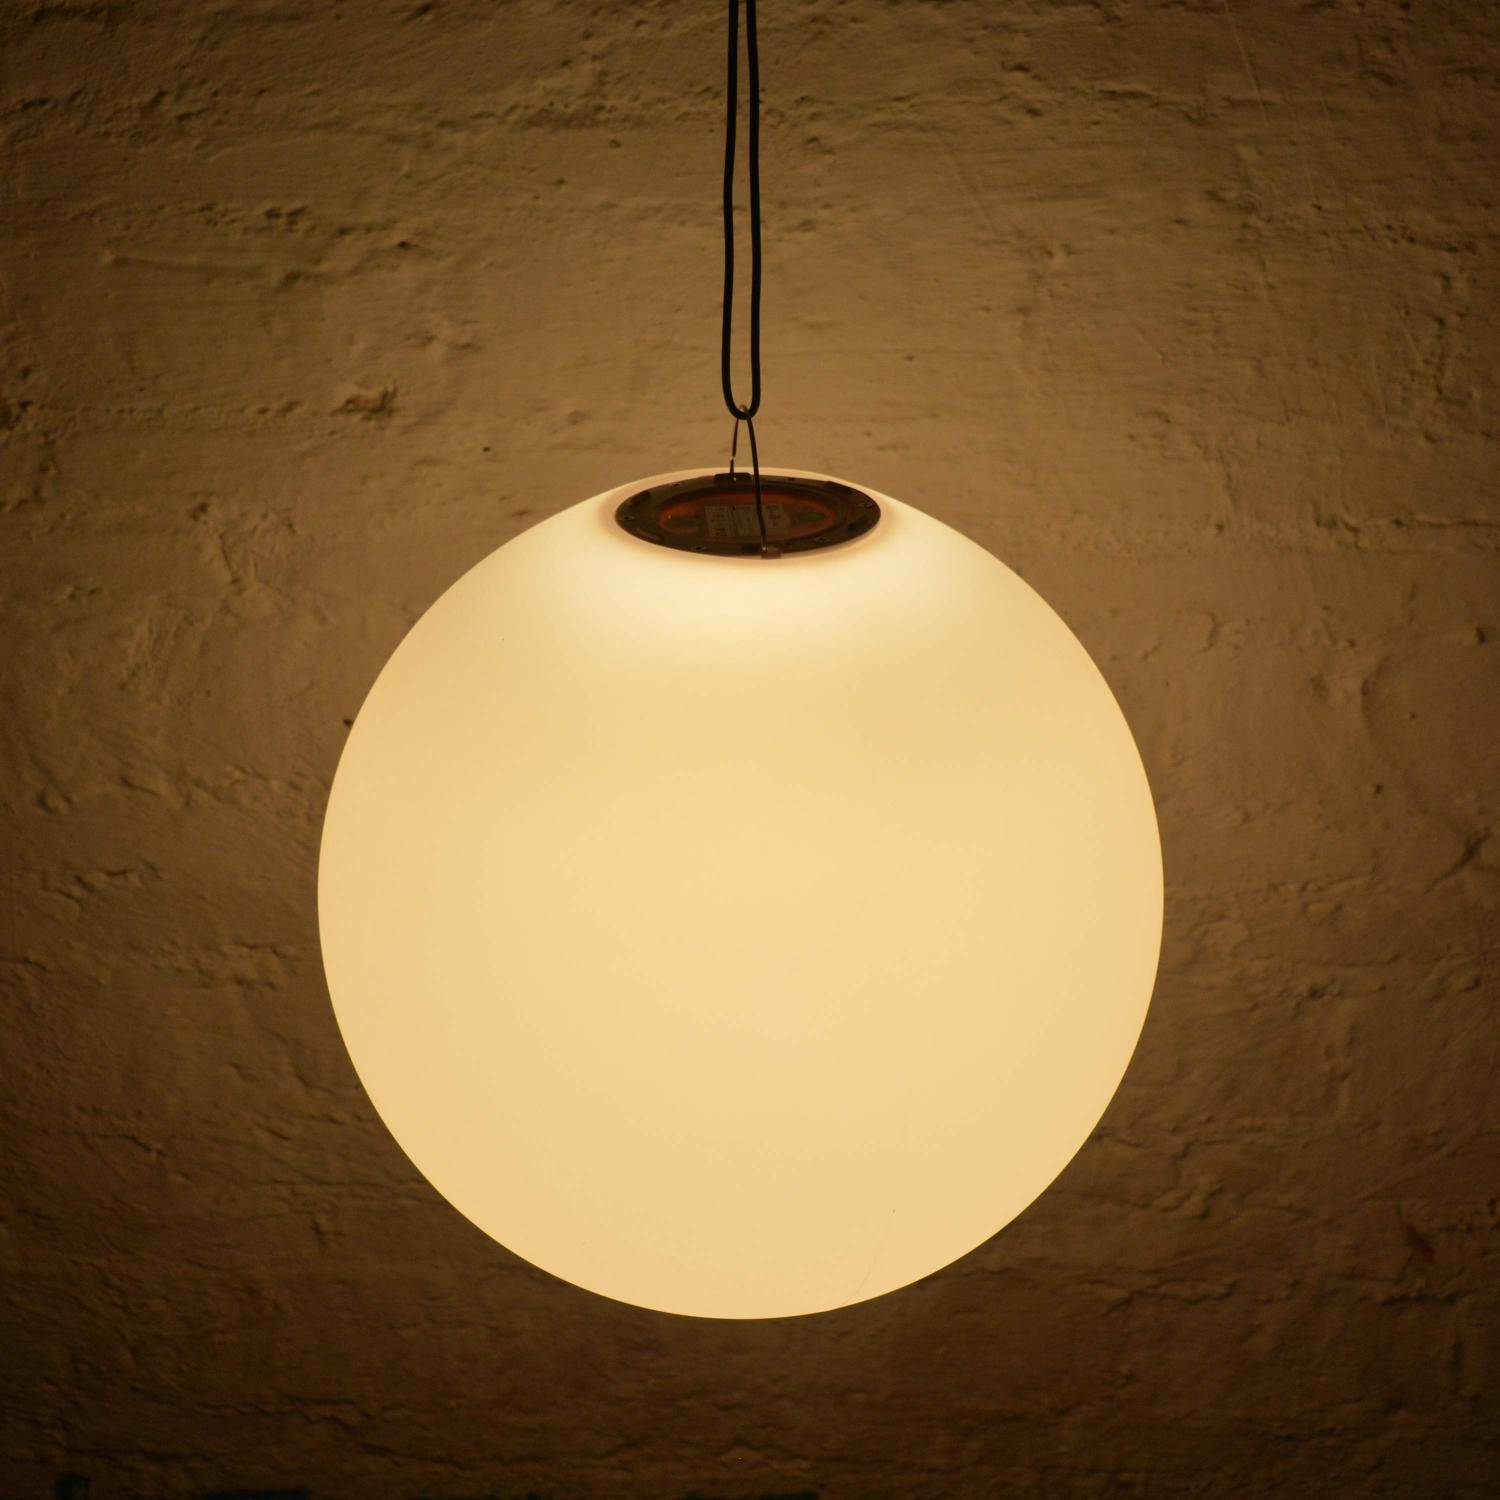 40cm spherical LED lamp – Decorative light sphere, remote control, Warm white Photo5